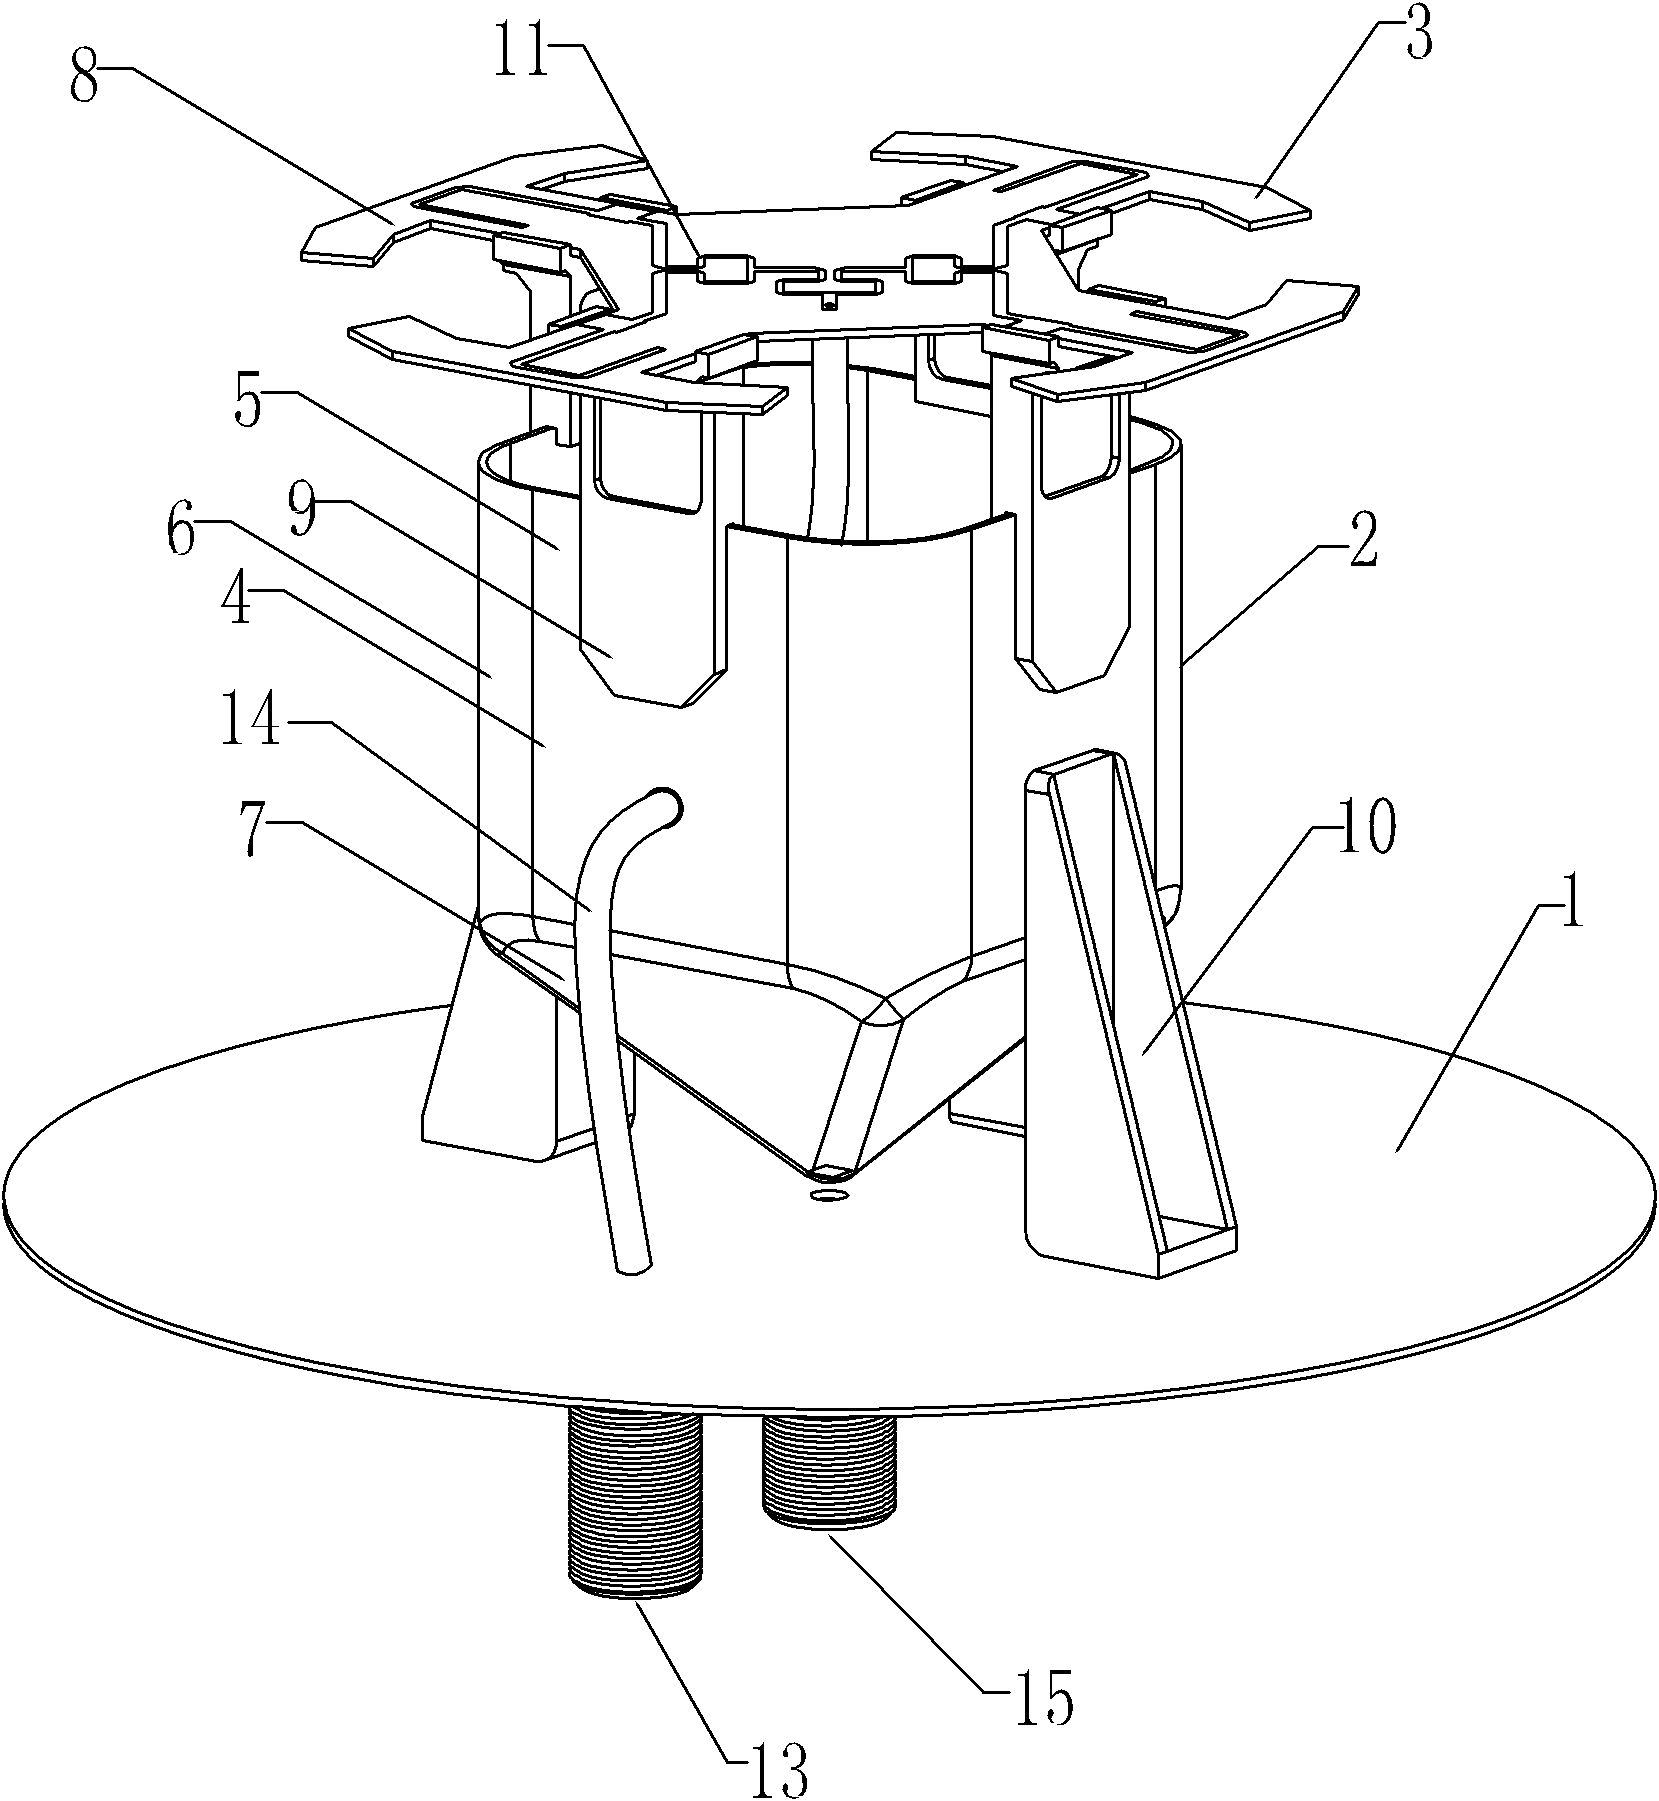 Indoor dual-polarized omnidirectional antenna